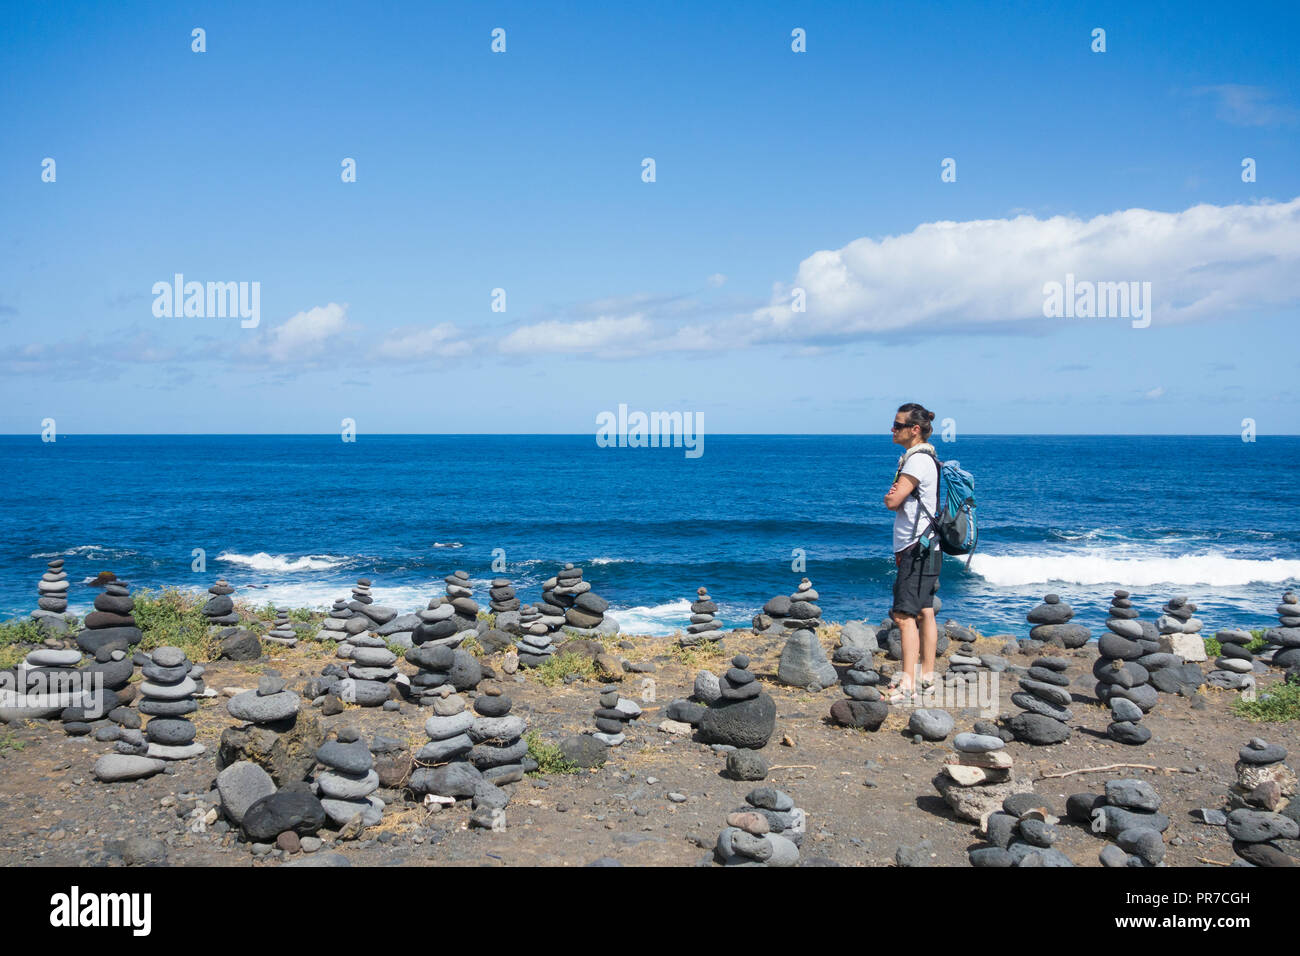 Balanced stones/stone stacking on rocky beach. Stock Photo